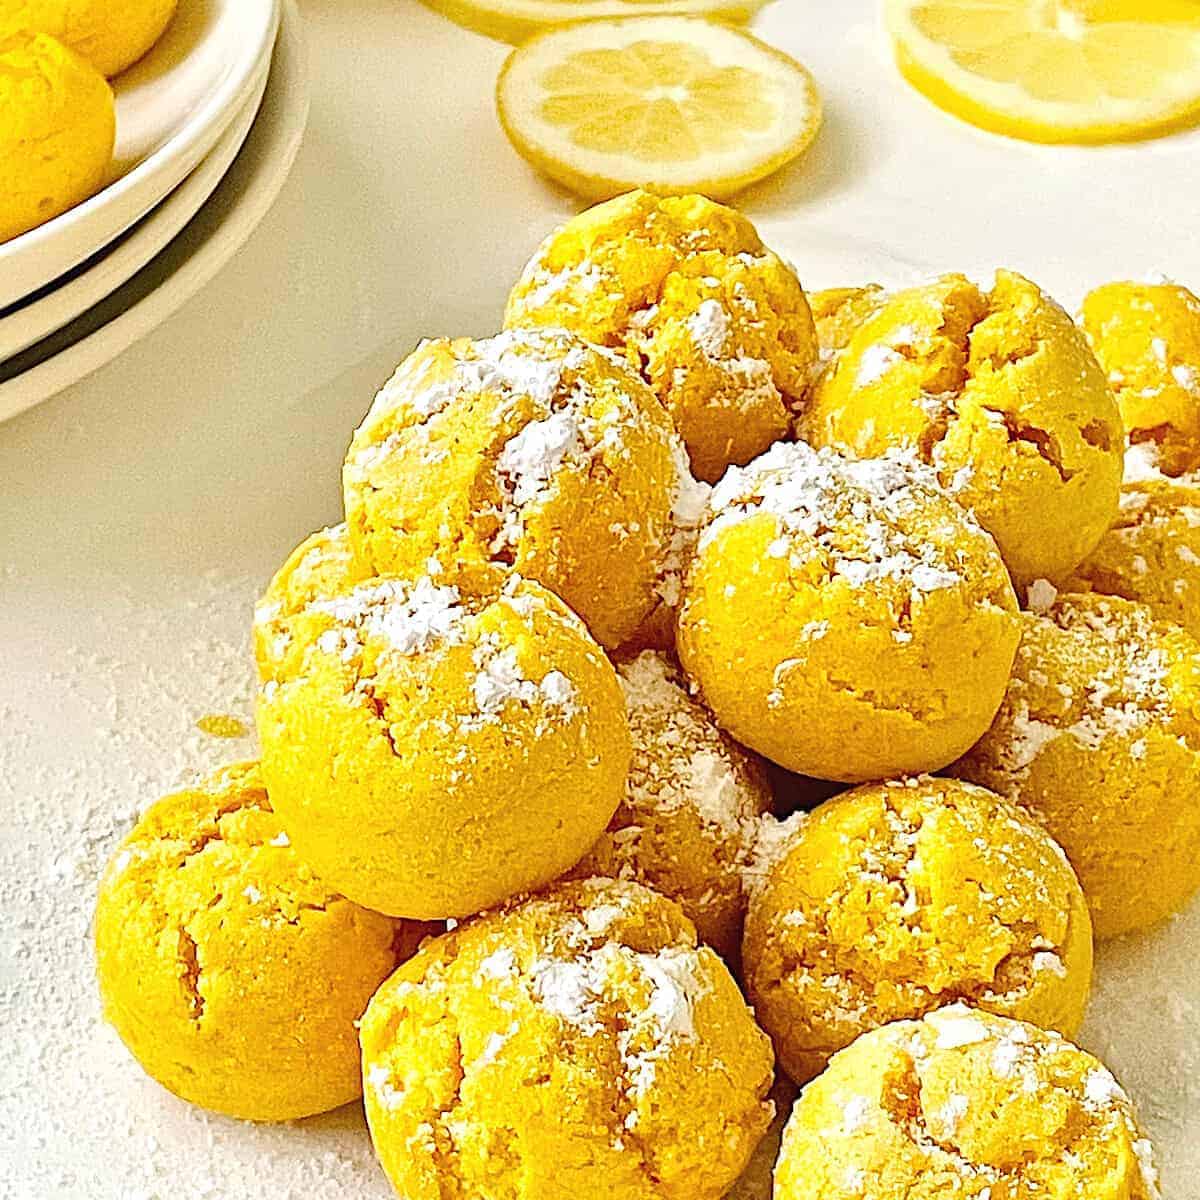 https://www.everydayfamilycooking.com/wp-content/uploads/2021/04/air-fryer-lemon-cookie-balls-picture.jpg